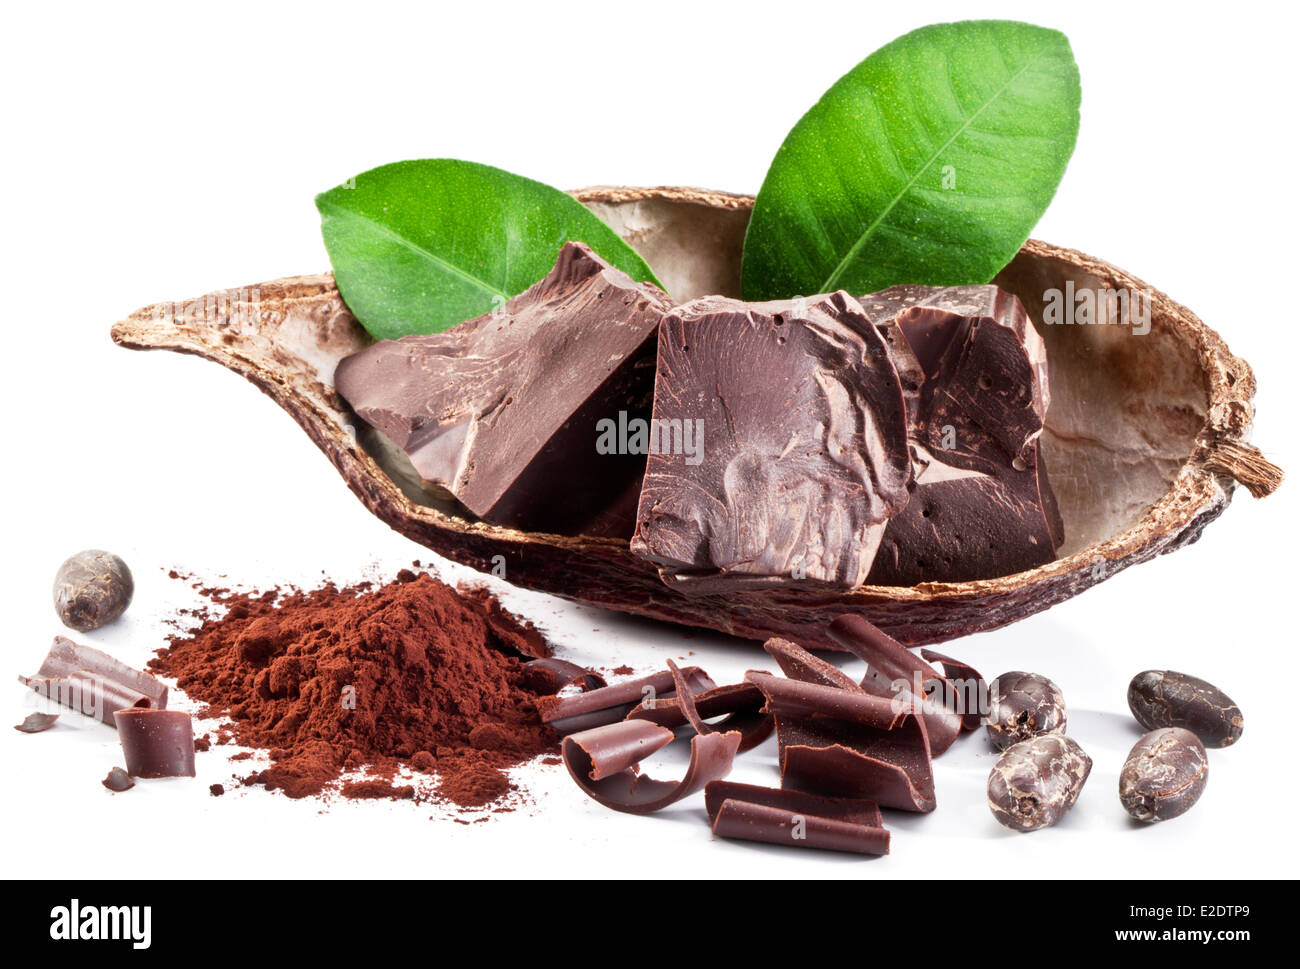 Chocolate blocks isolated on a white background. Stock Photo